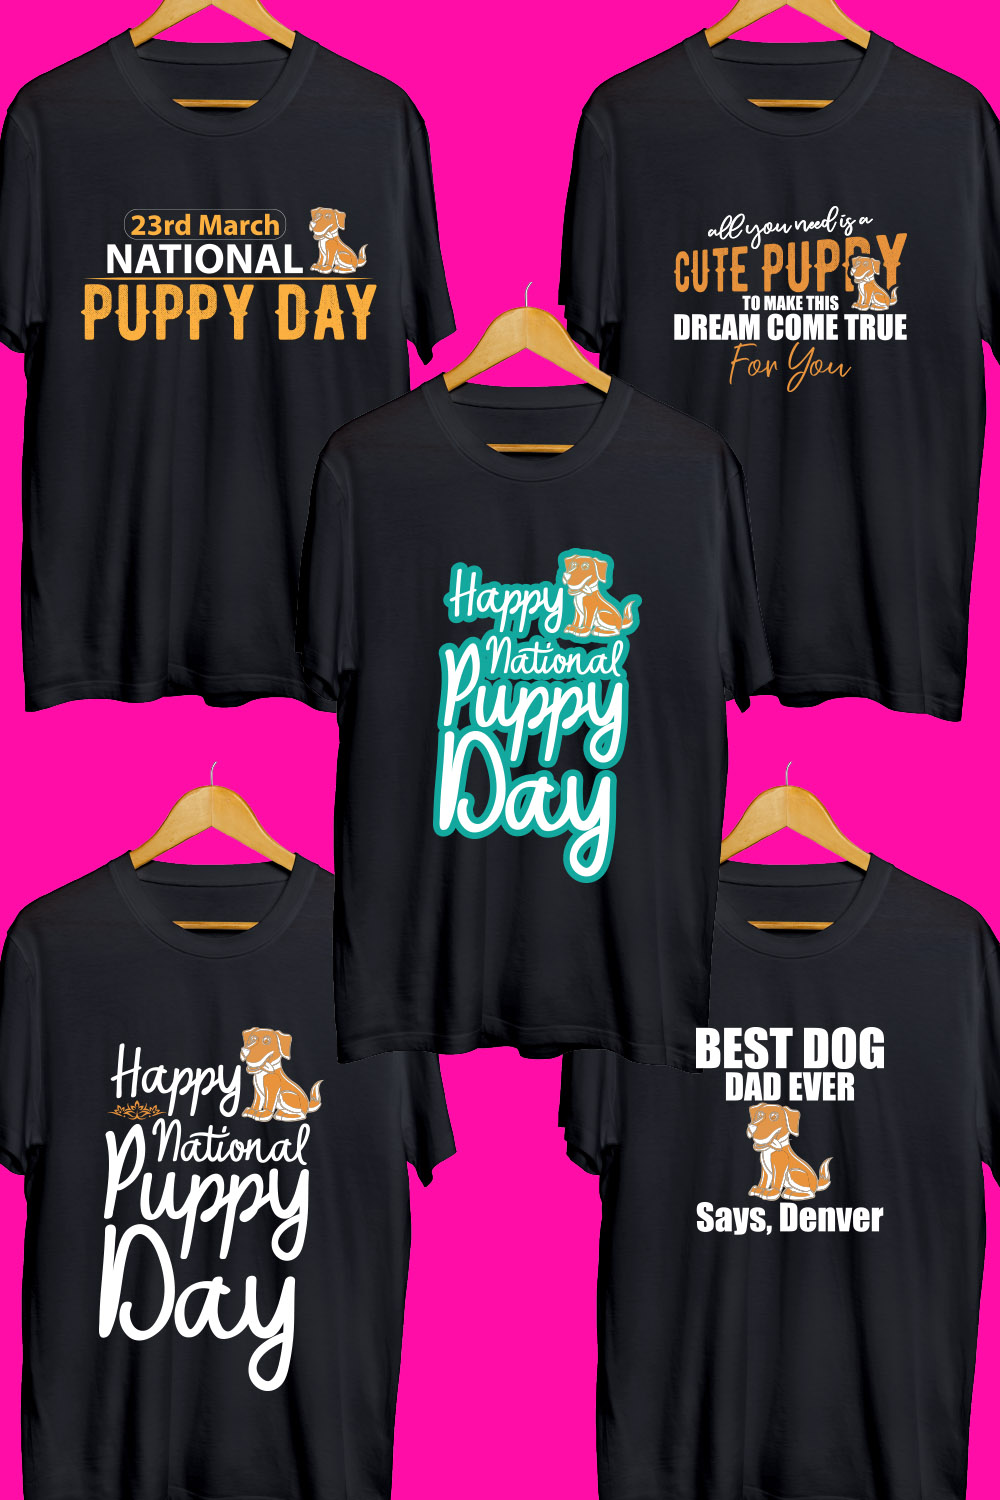 Puppy Day SVG T Shirt Designs Bundle pinterest preview image.